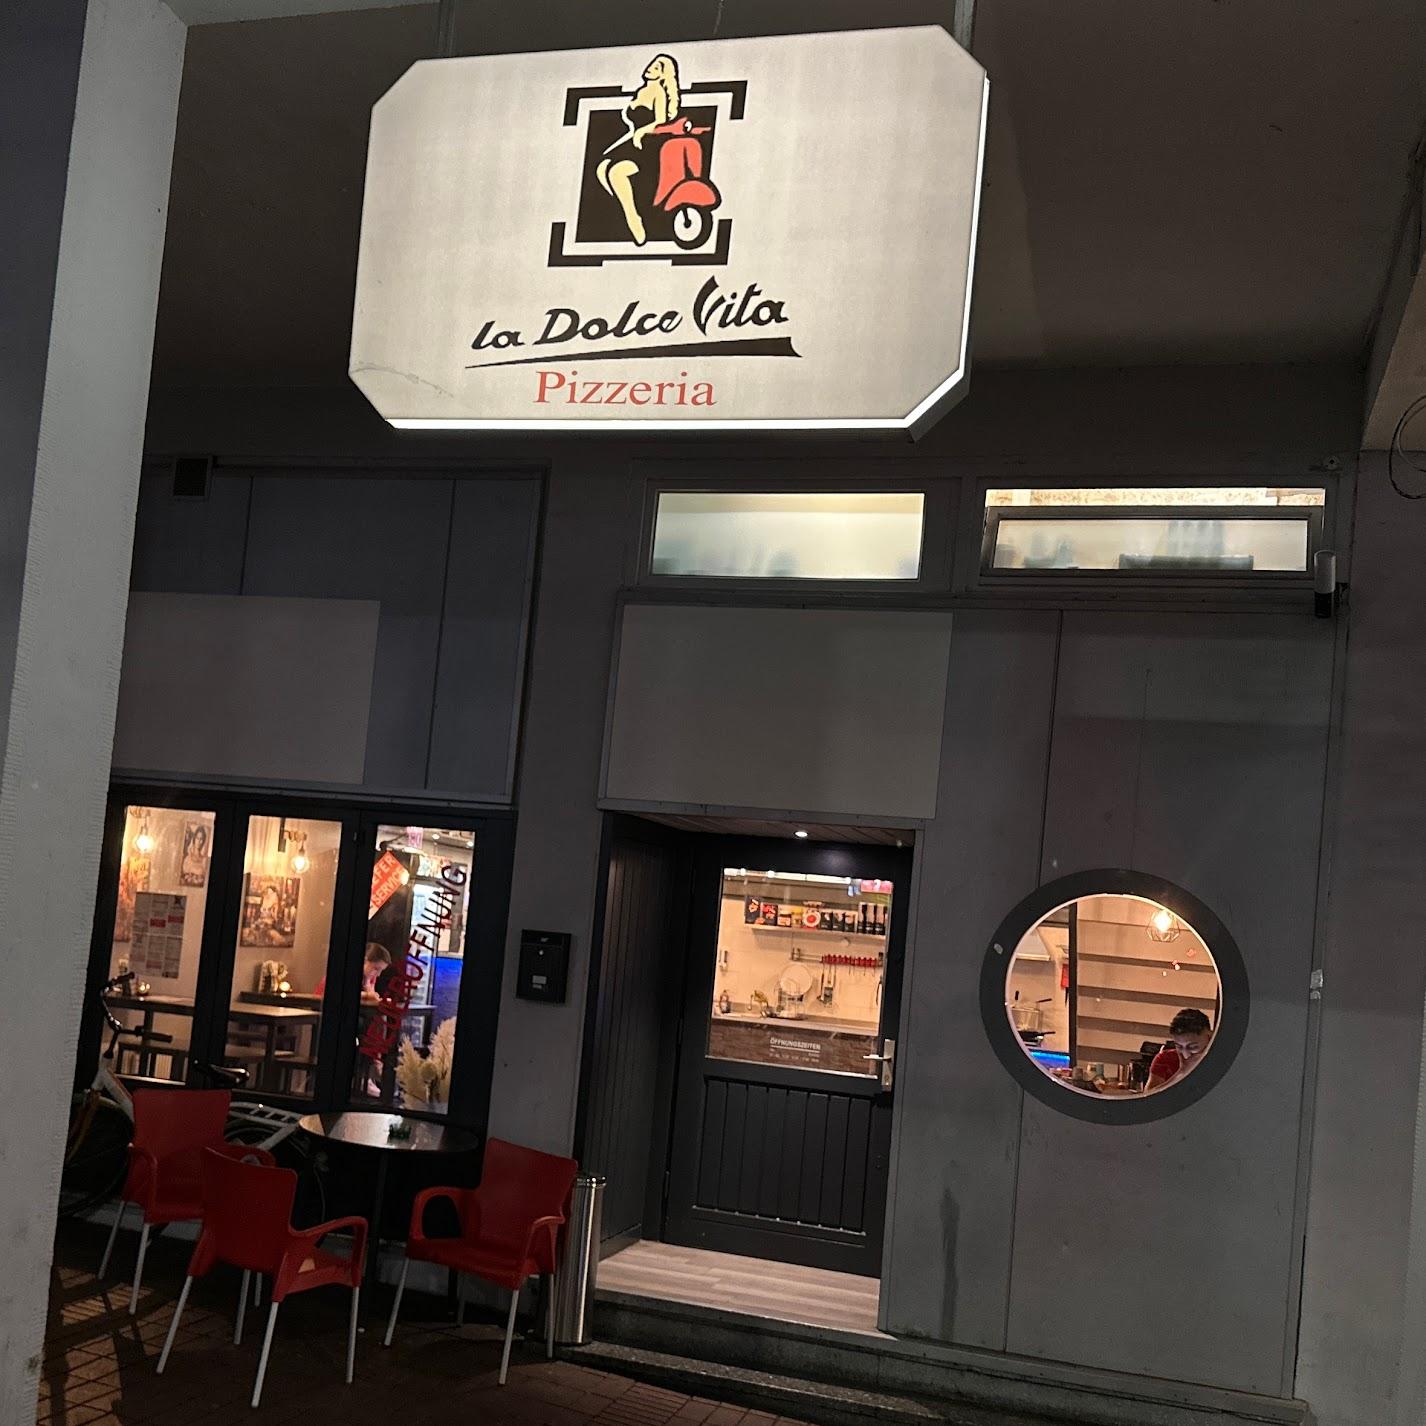 Restaurant "La Dolce Vita" in Lippstadt